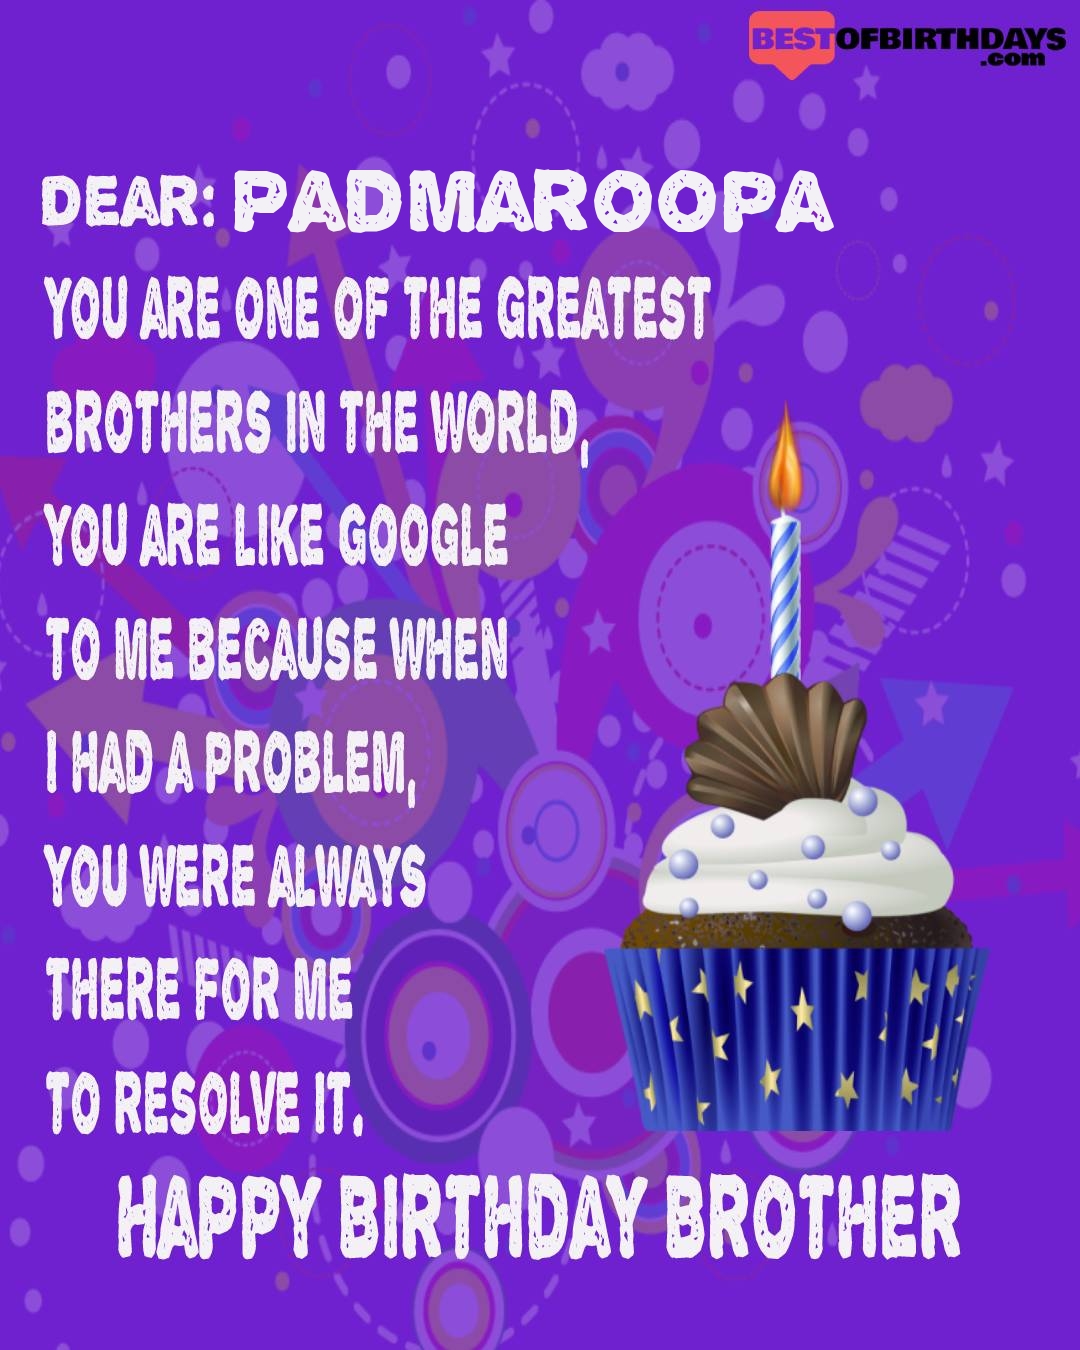 Happy birthday padmaroopa bhai brother bro